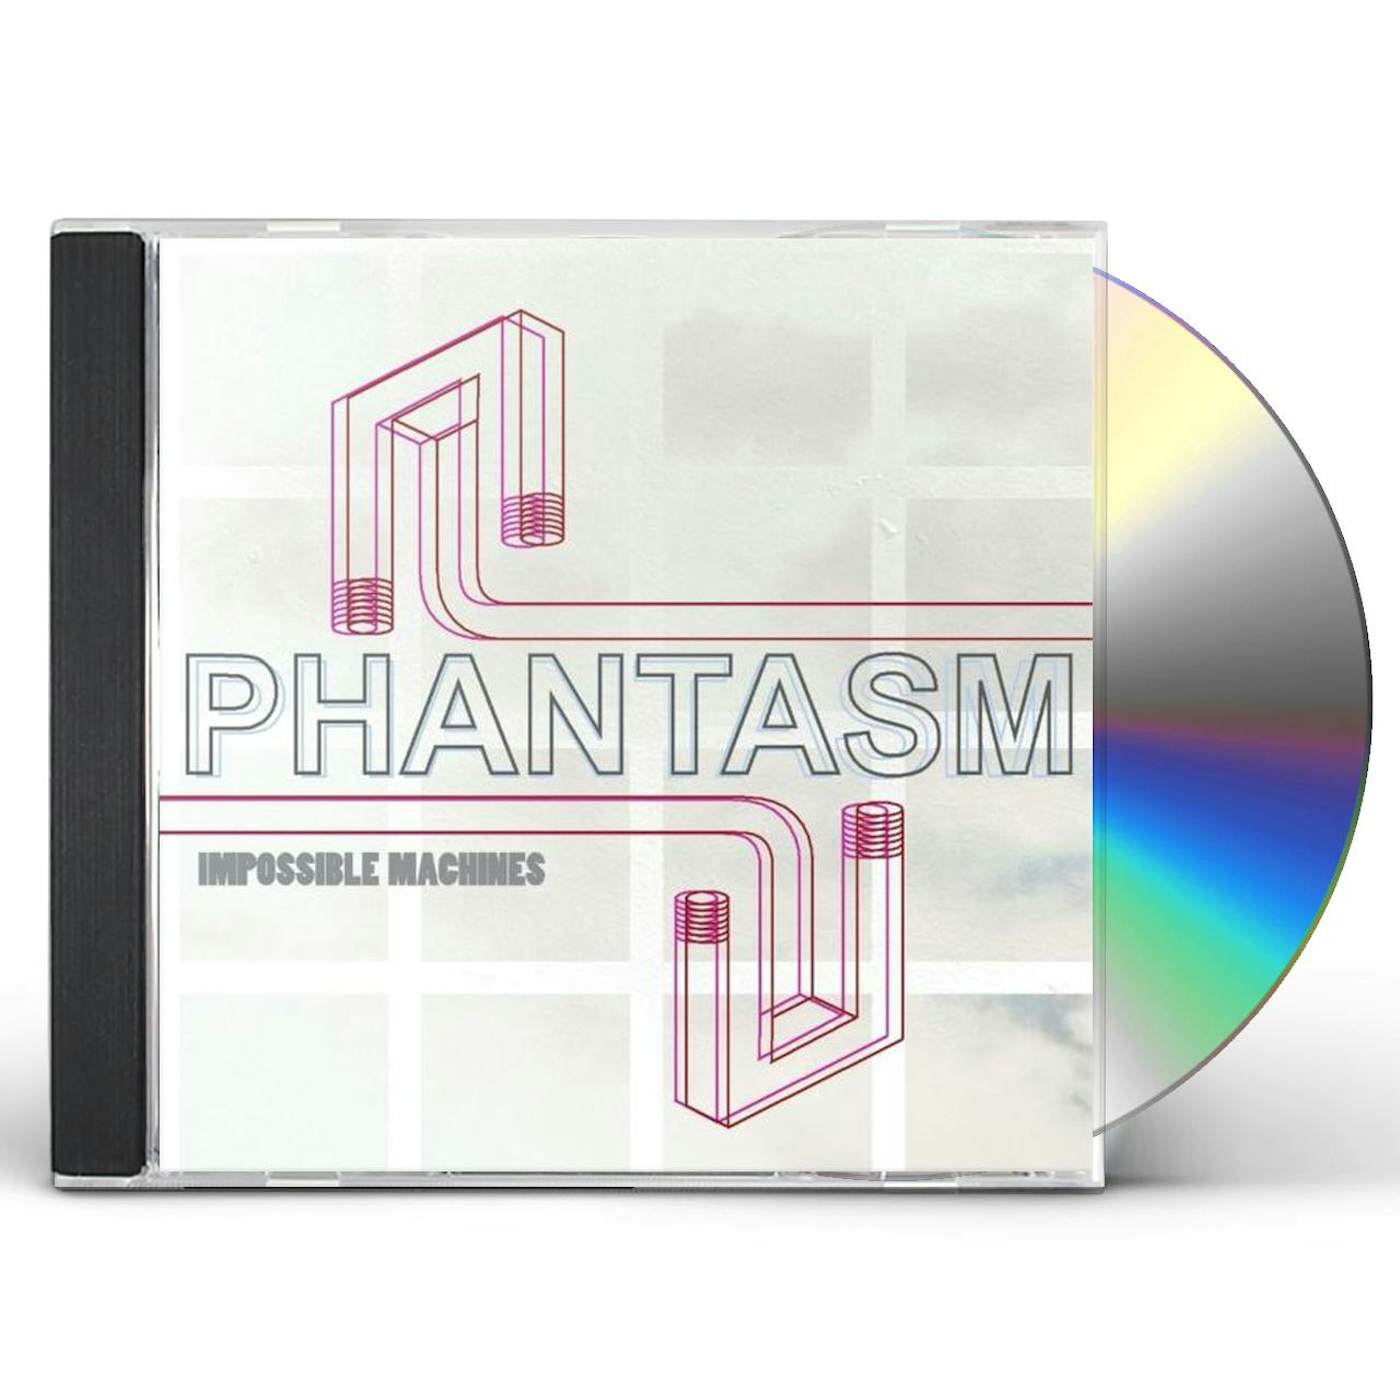 Phantasm IMPOSSIBLE MACHINES CD